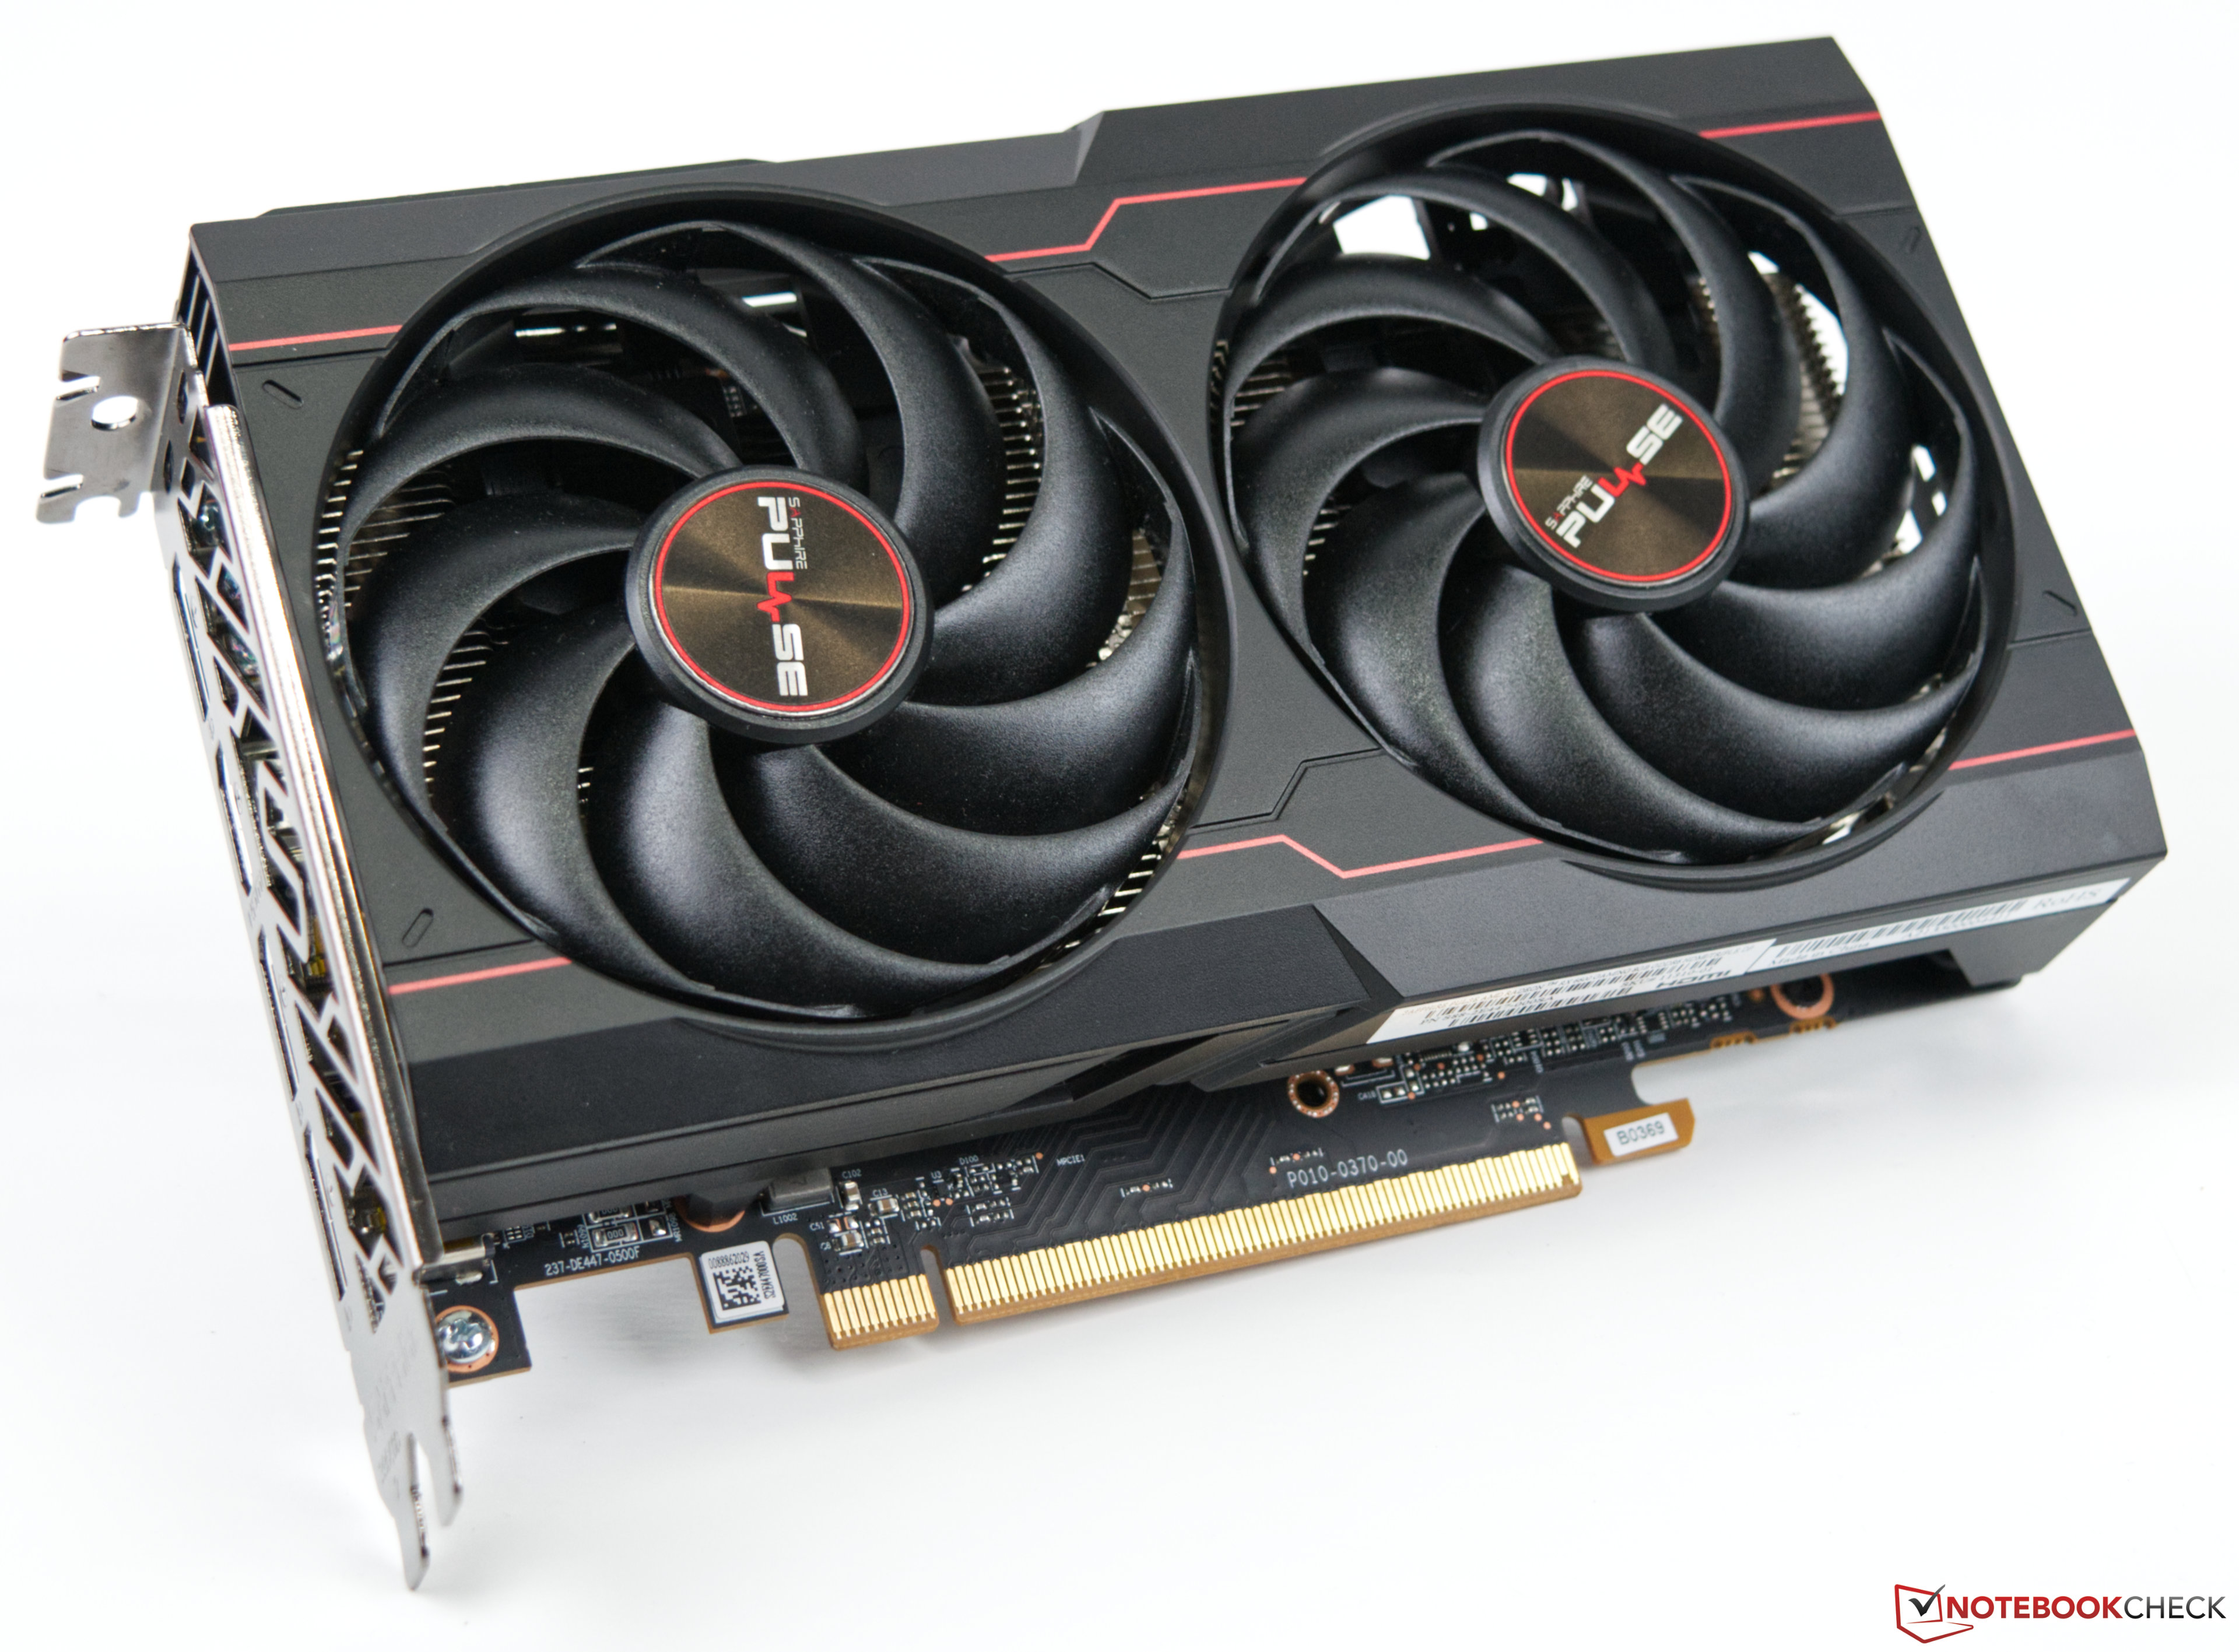 Vleien oog Mand AMD Radeon RX 6600 GPU - Benchmarks and Specs - NotebookCheck.net Tech